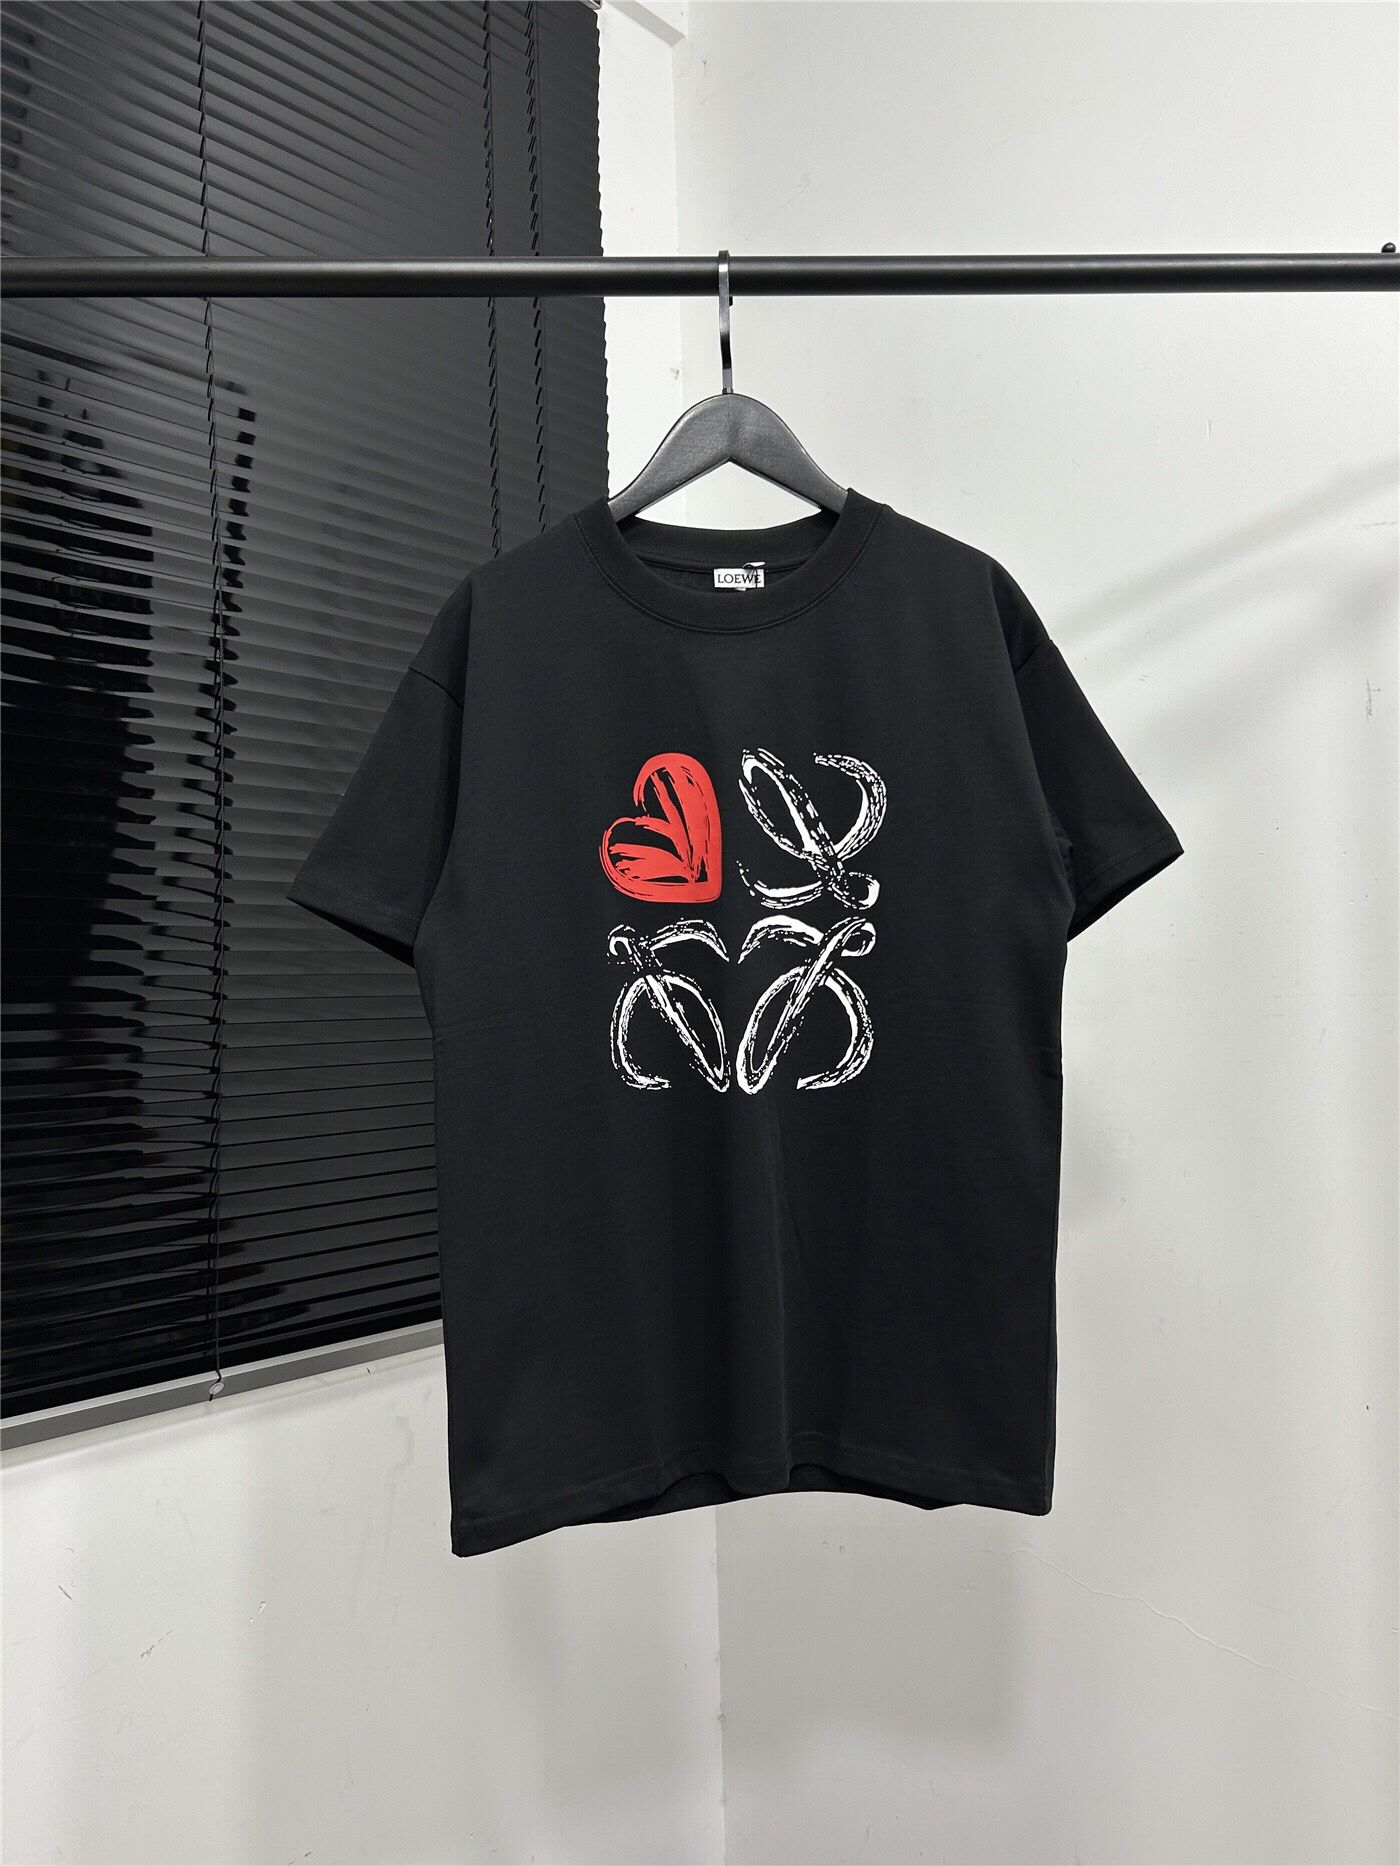 Loewe Black T-shirt New 